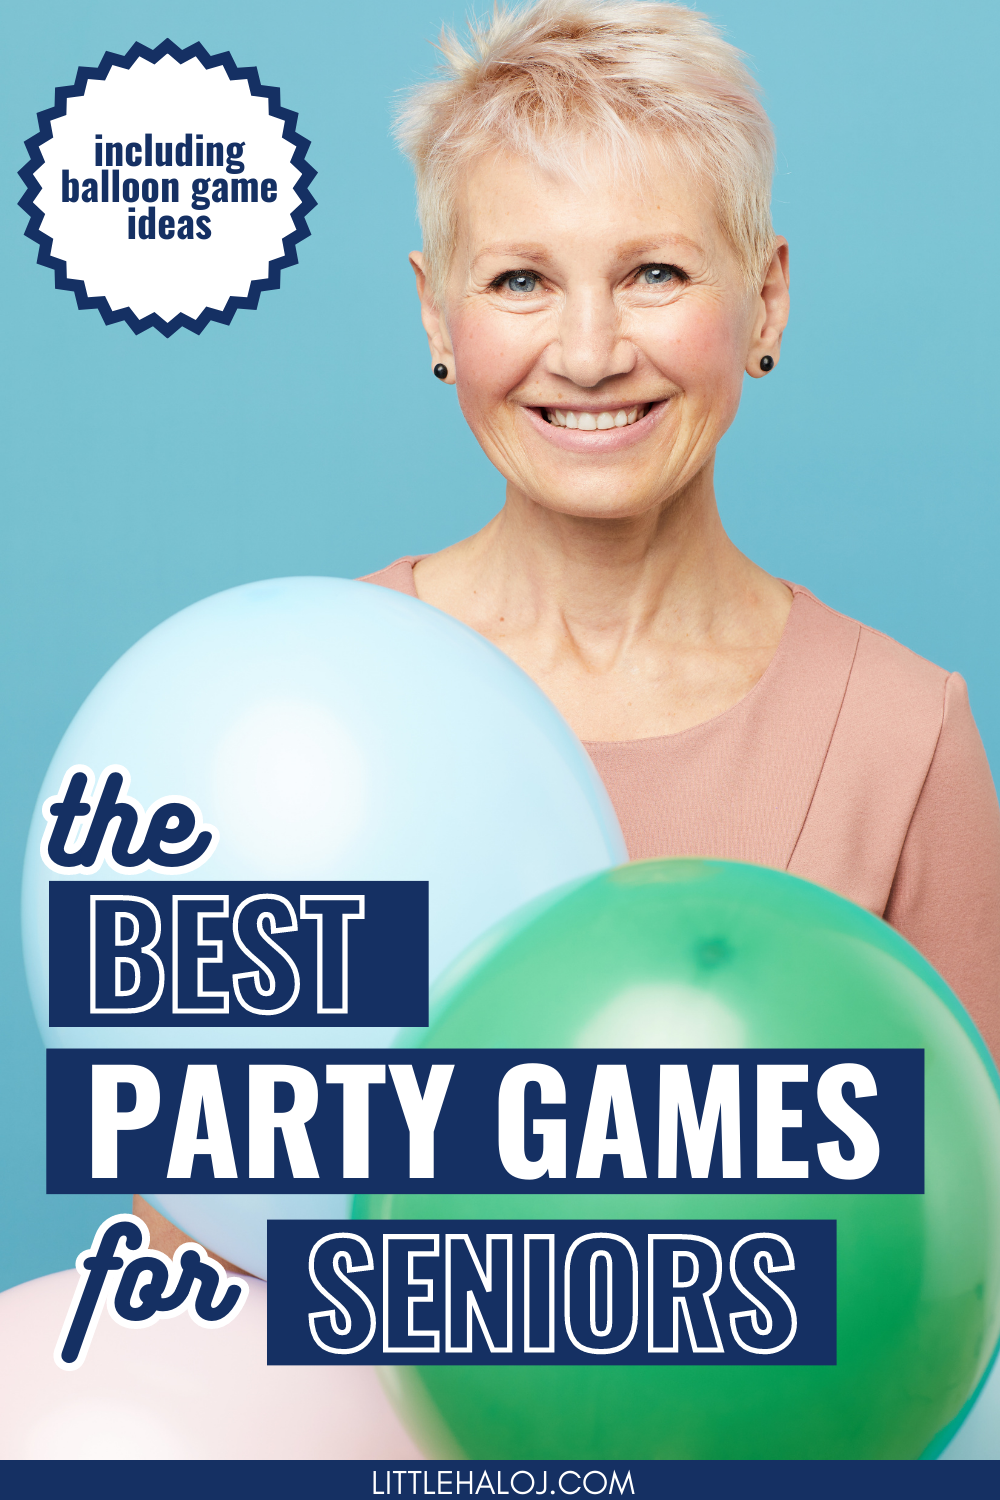 senior citizen lady holding balloons for a Senior Citizens Party Games